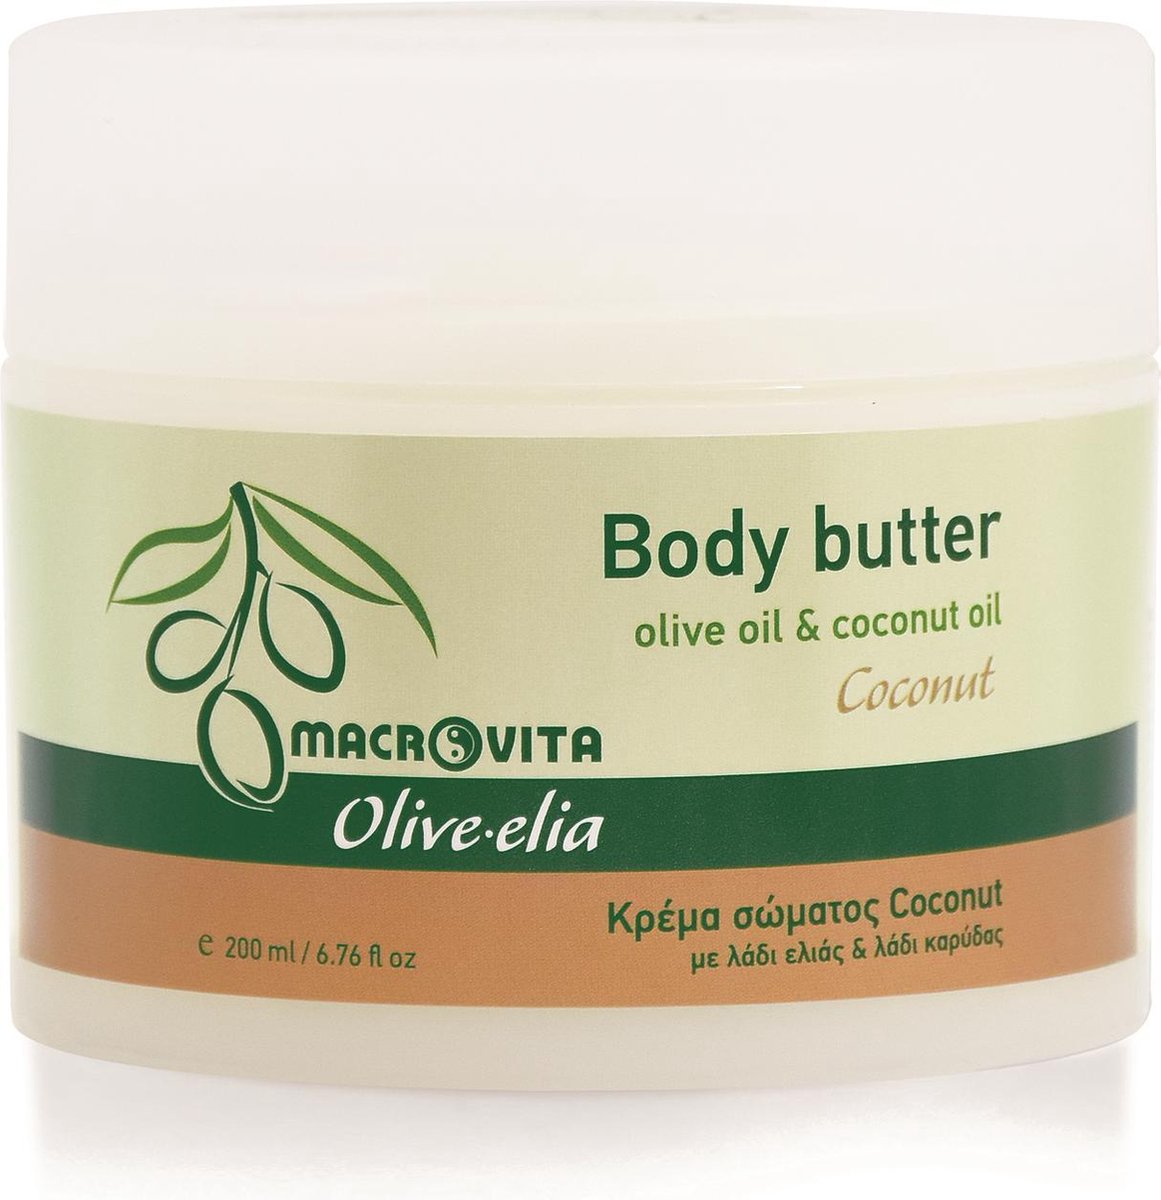 Macrovita Olive-elia Body Butter Coconut (Kokosolie)